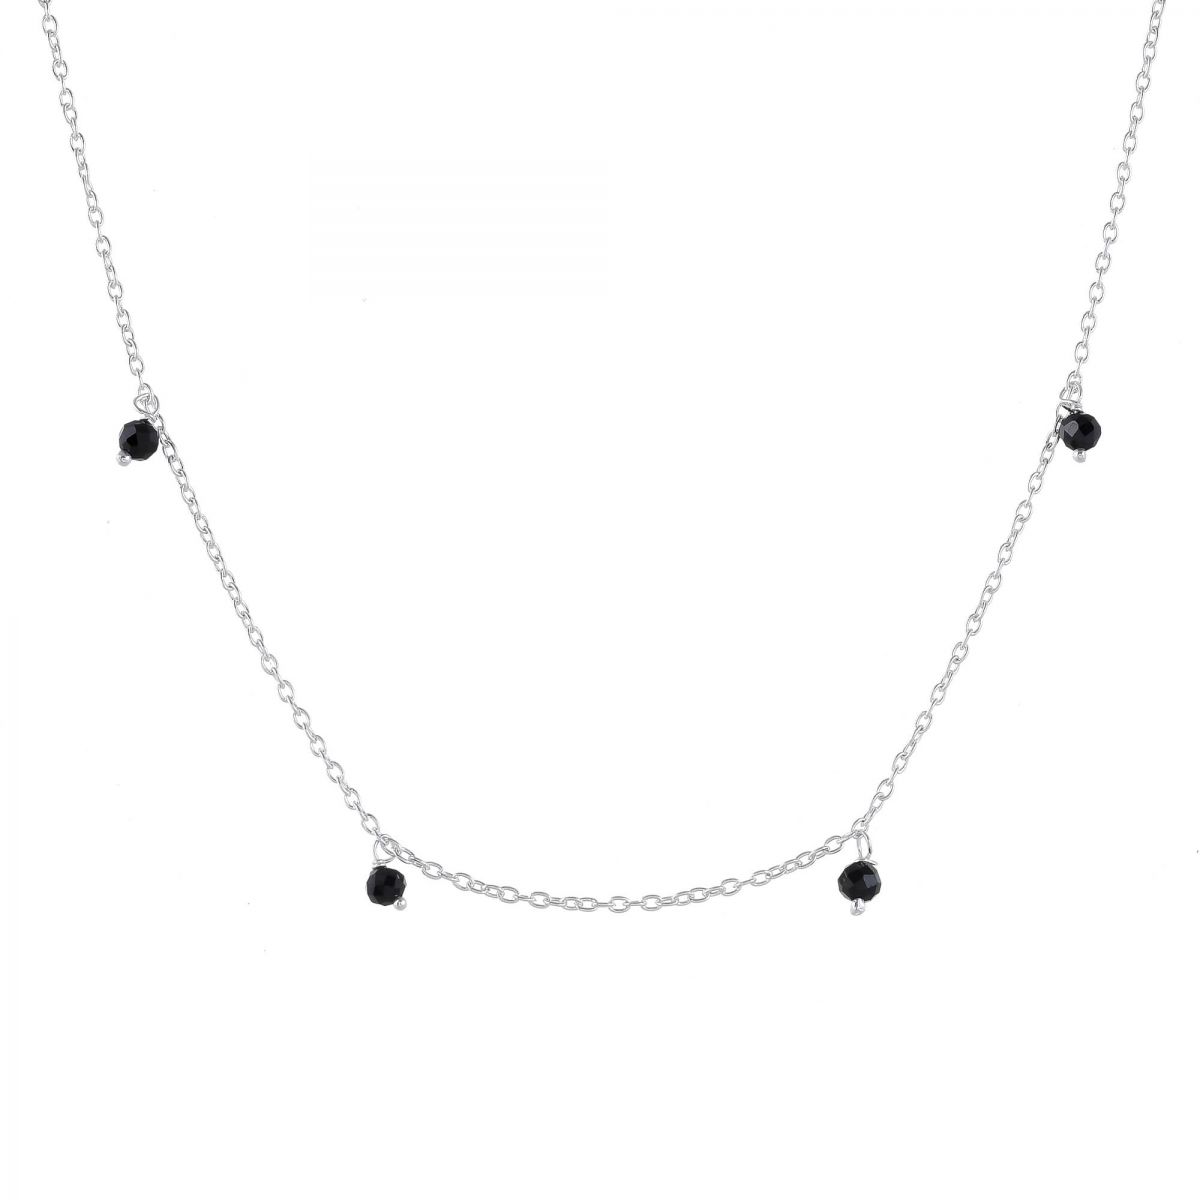 hcollier 3mm black agate beads 90cm